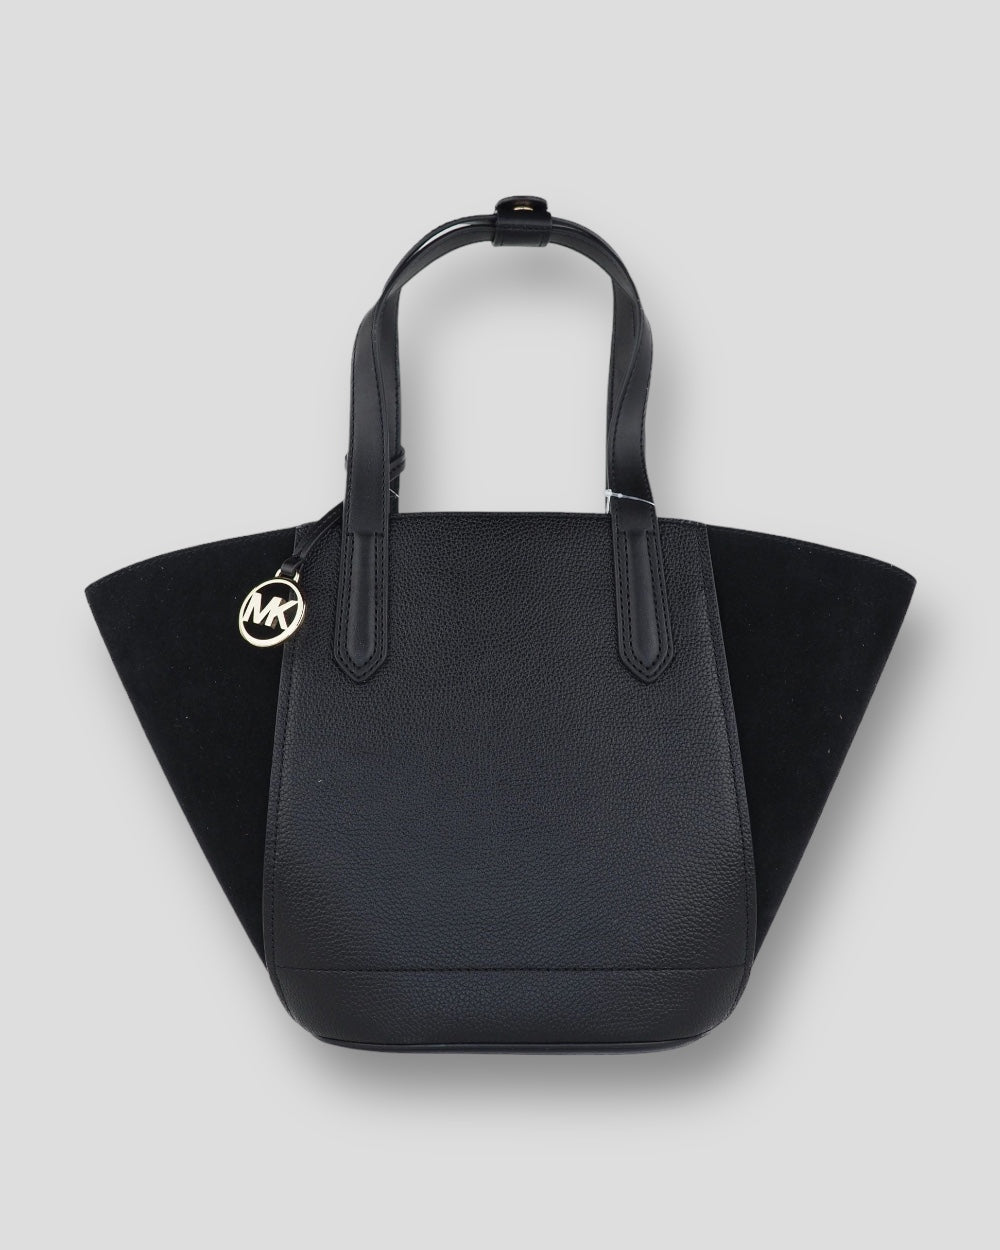 Michael Kors Portia Small Pebbled Leather Suede Tote Handbag (Black)